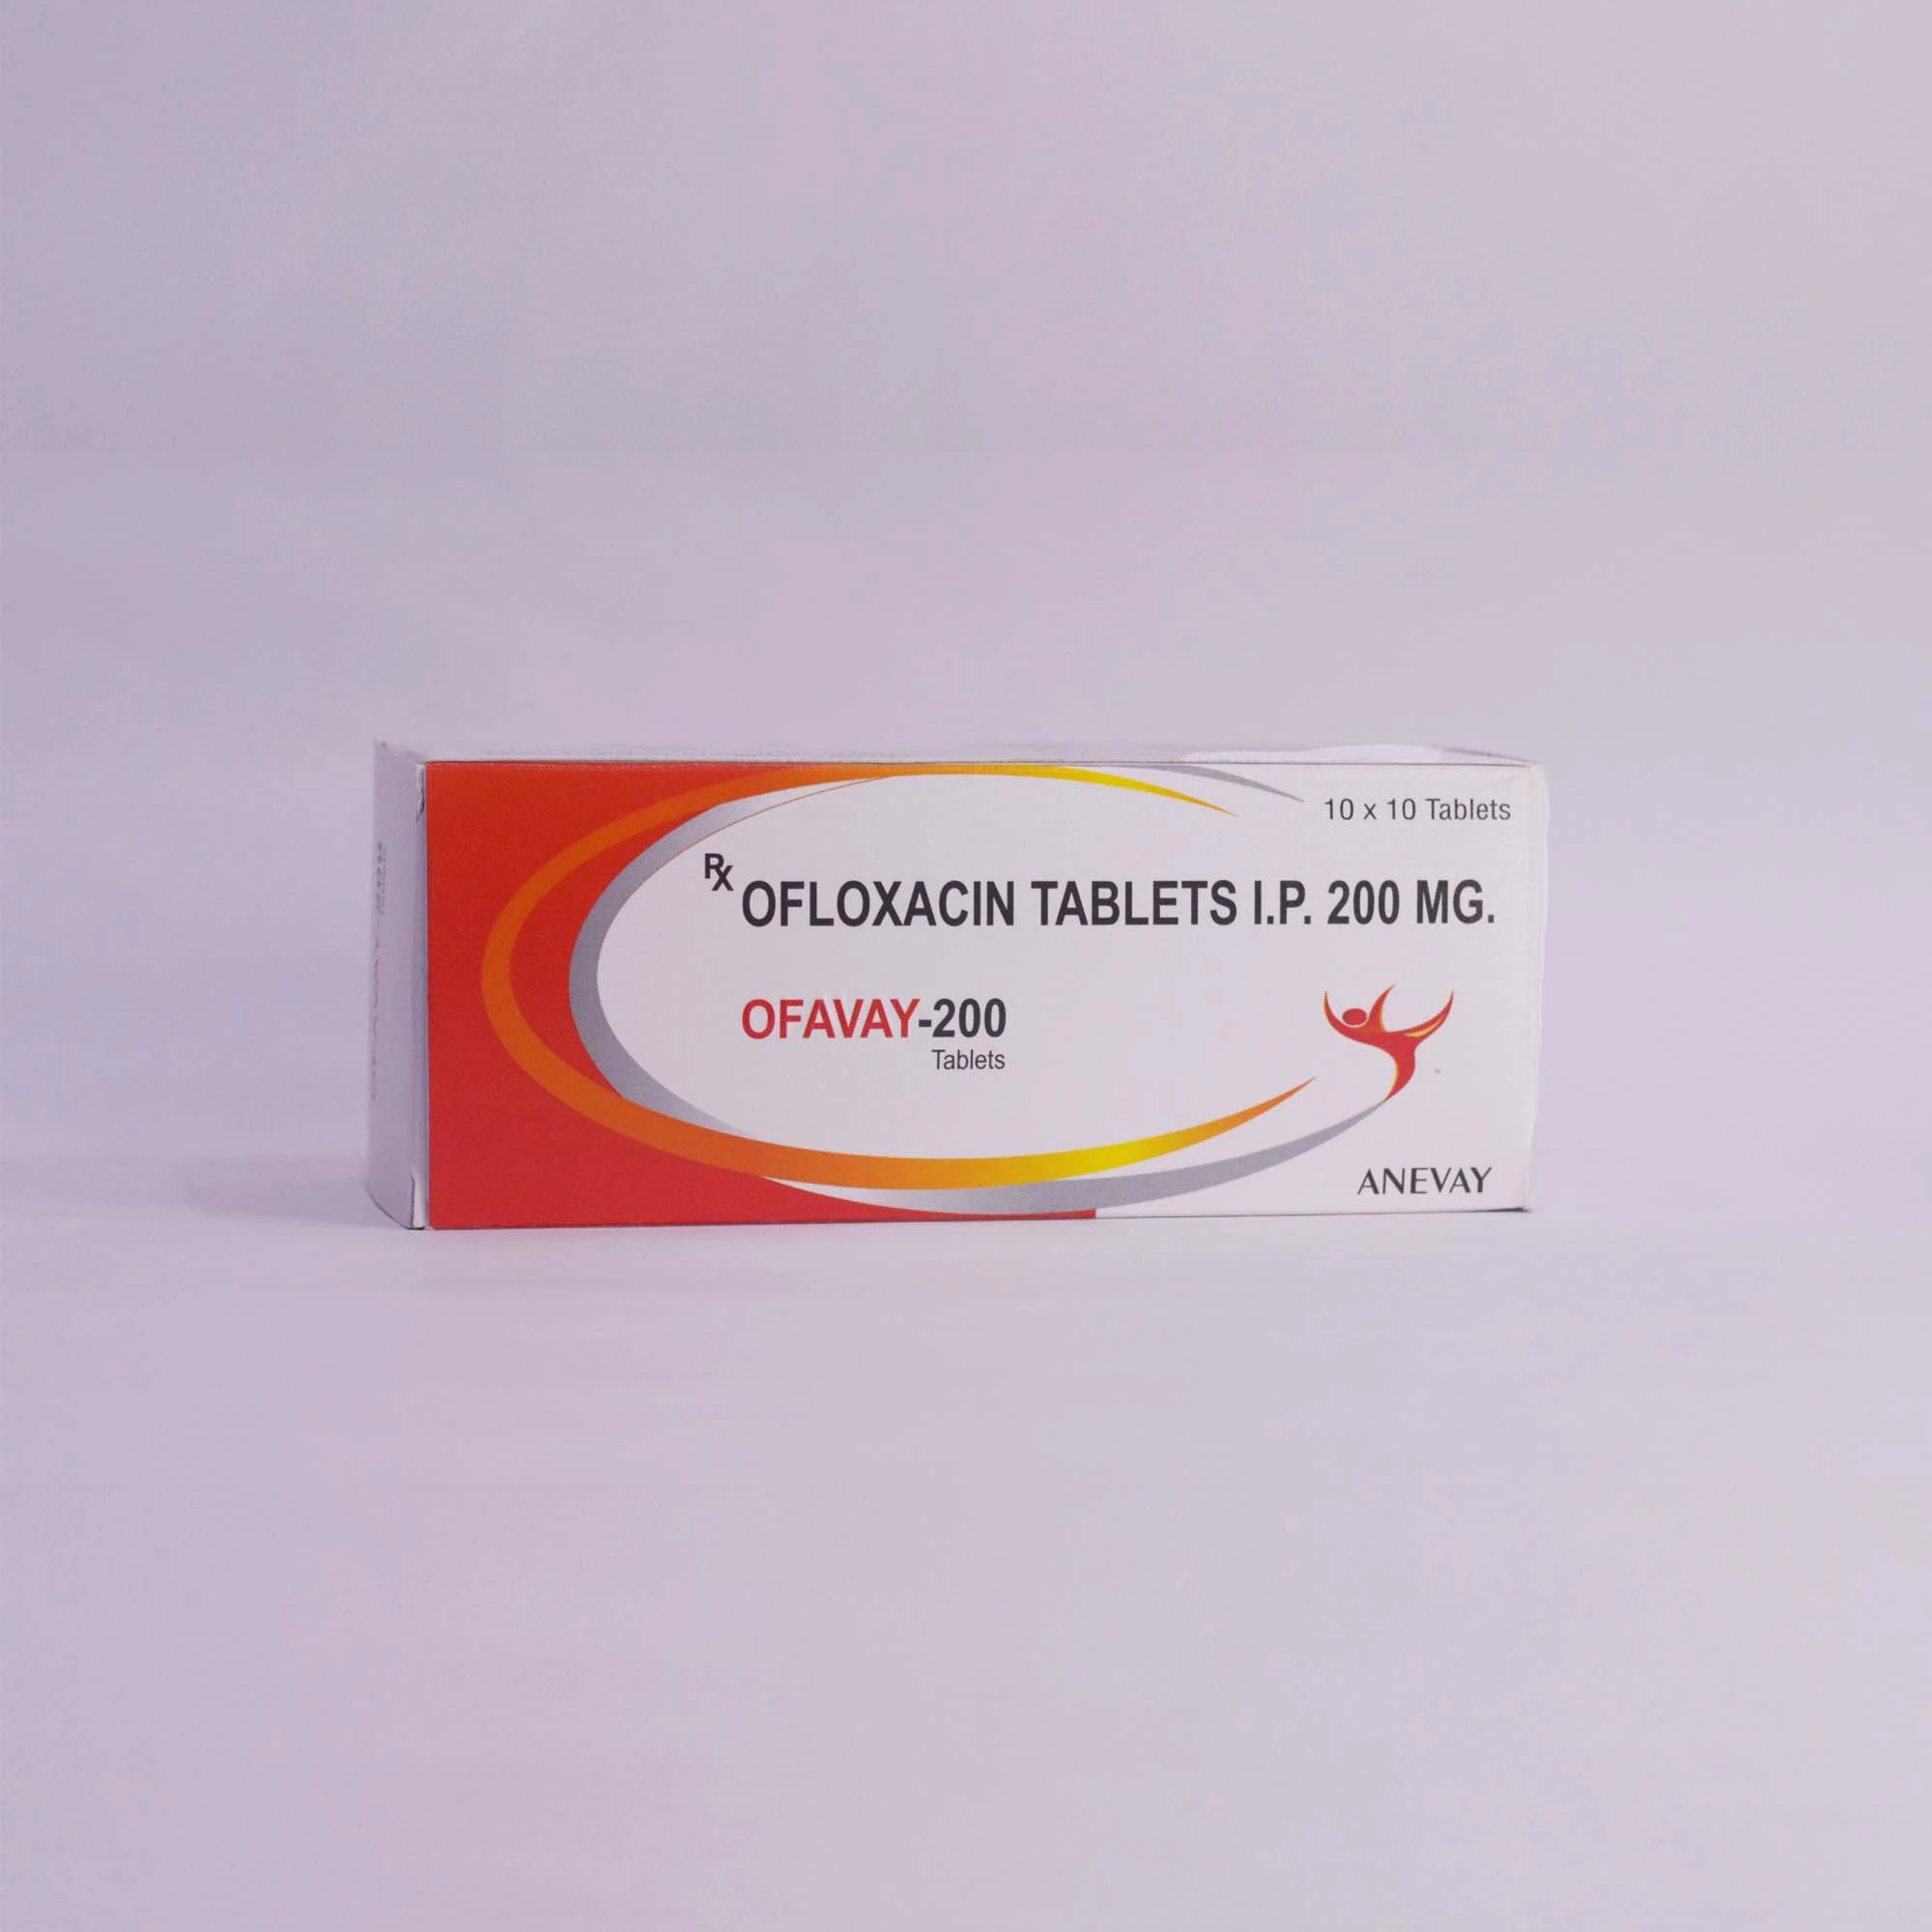 Ofavay-200 Tablets